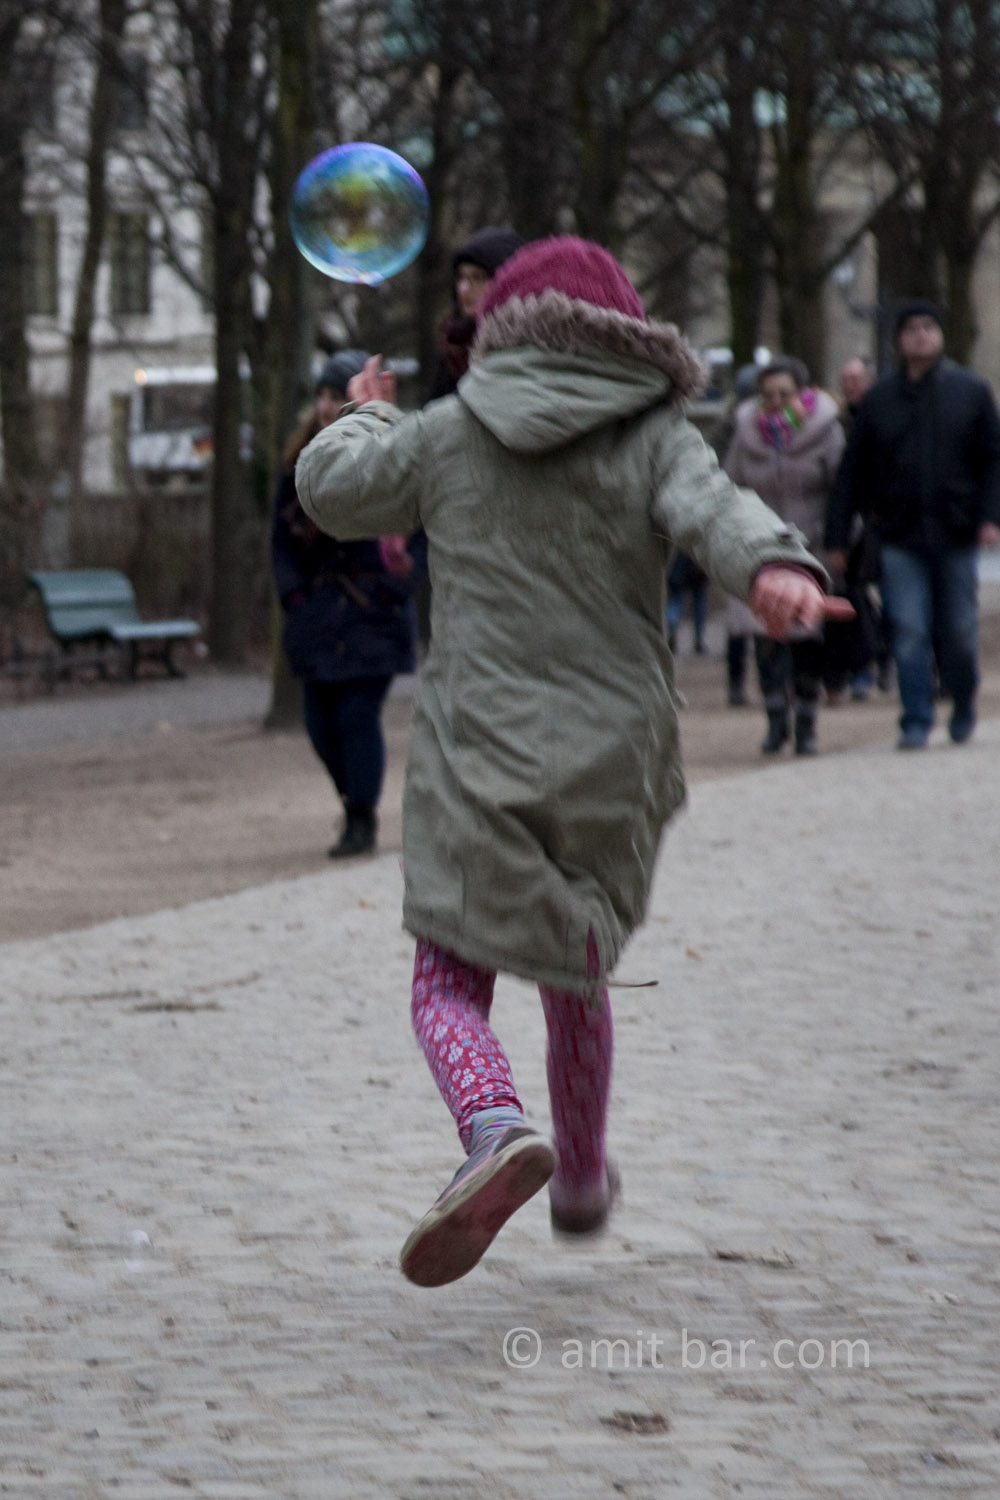 Berlin: Soap bubble. A girl is chasing a soap bubble